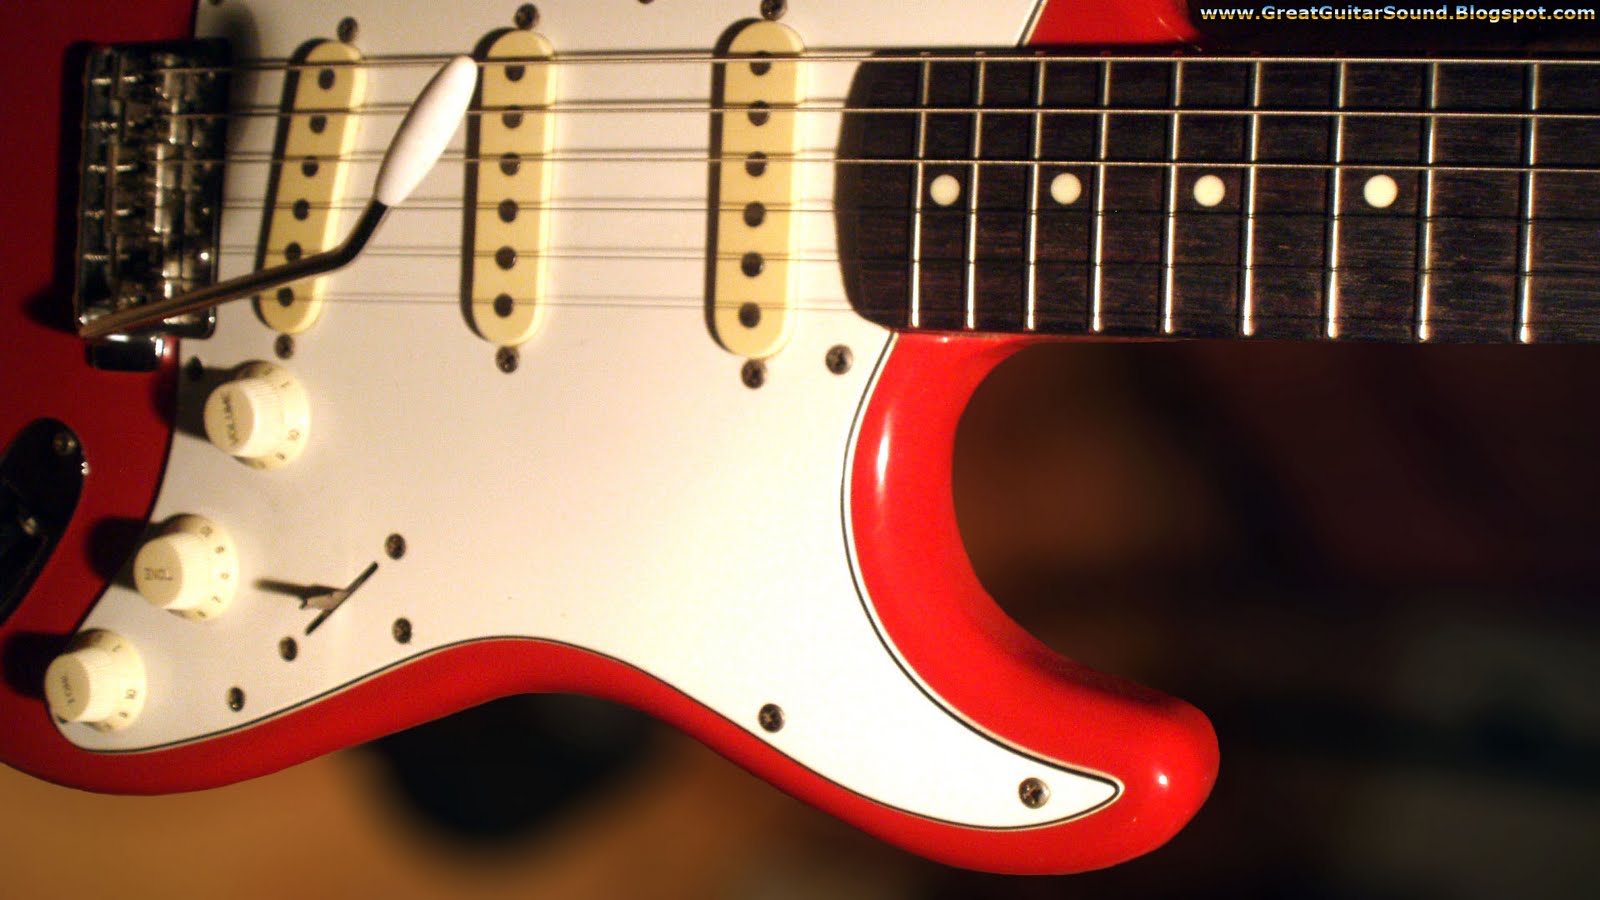 fender guitar wallpaper,guitar,string instrument,bass guitar,musical instrument,electric guitar